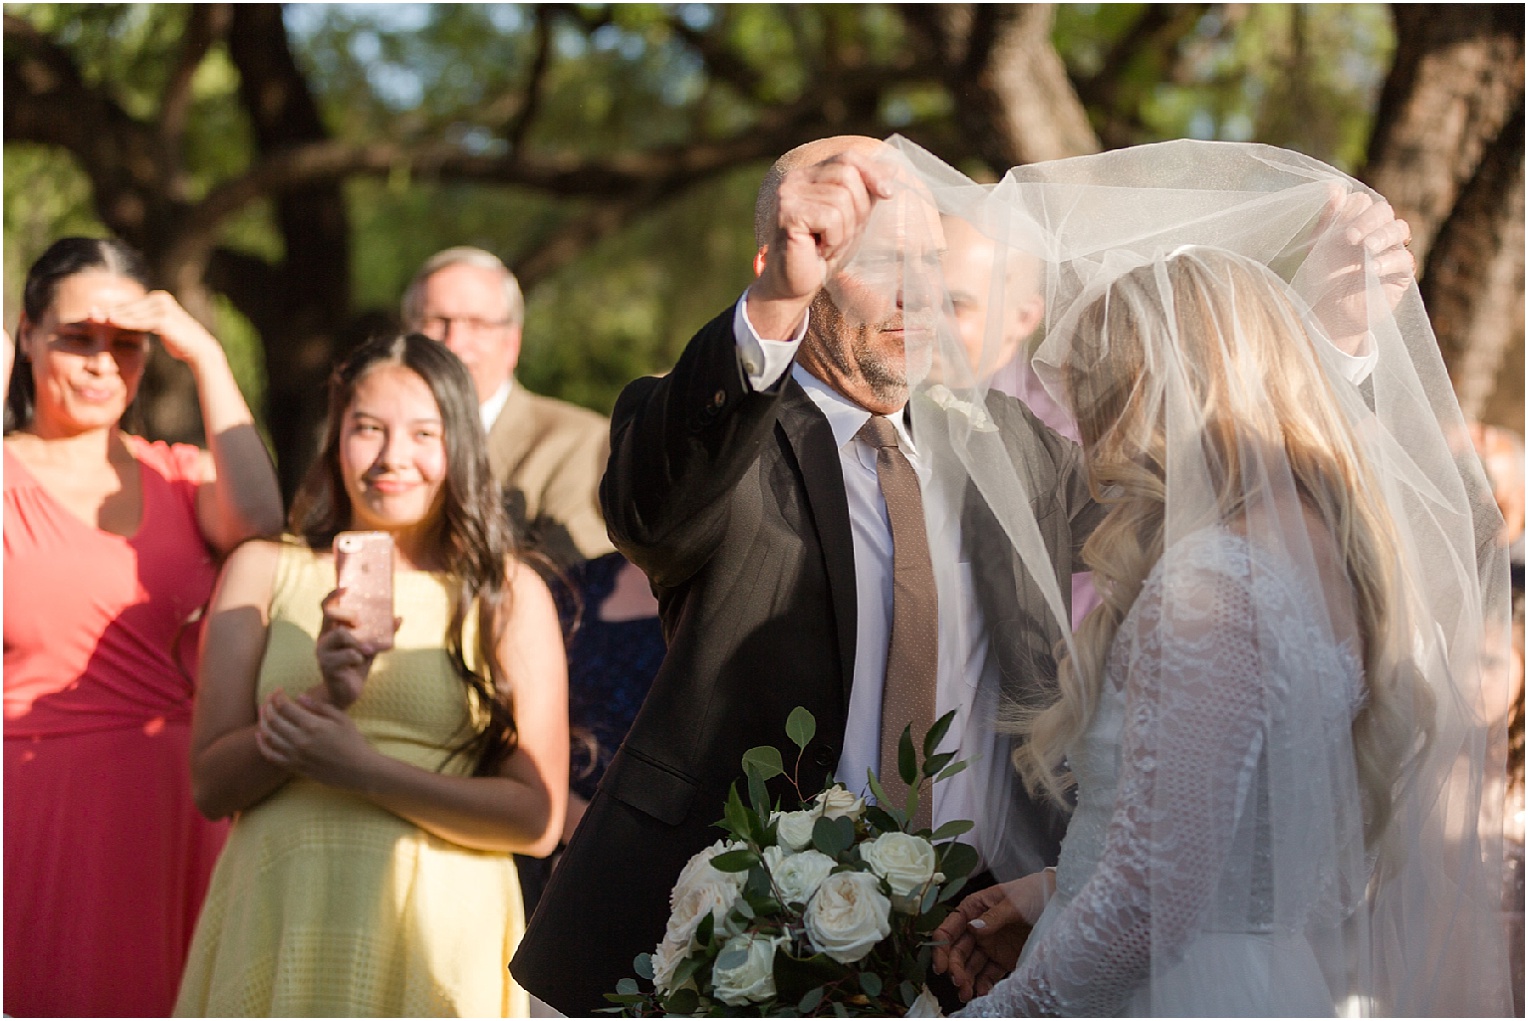 Intimate Backyard Wedding Tucson, AZ Chanel + Eddie outdoor ceremony and bridal veil